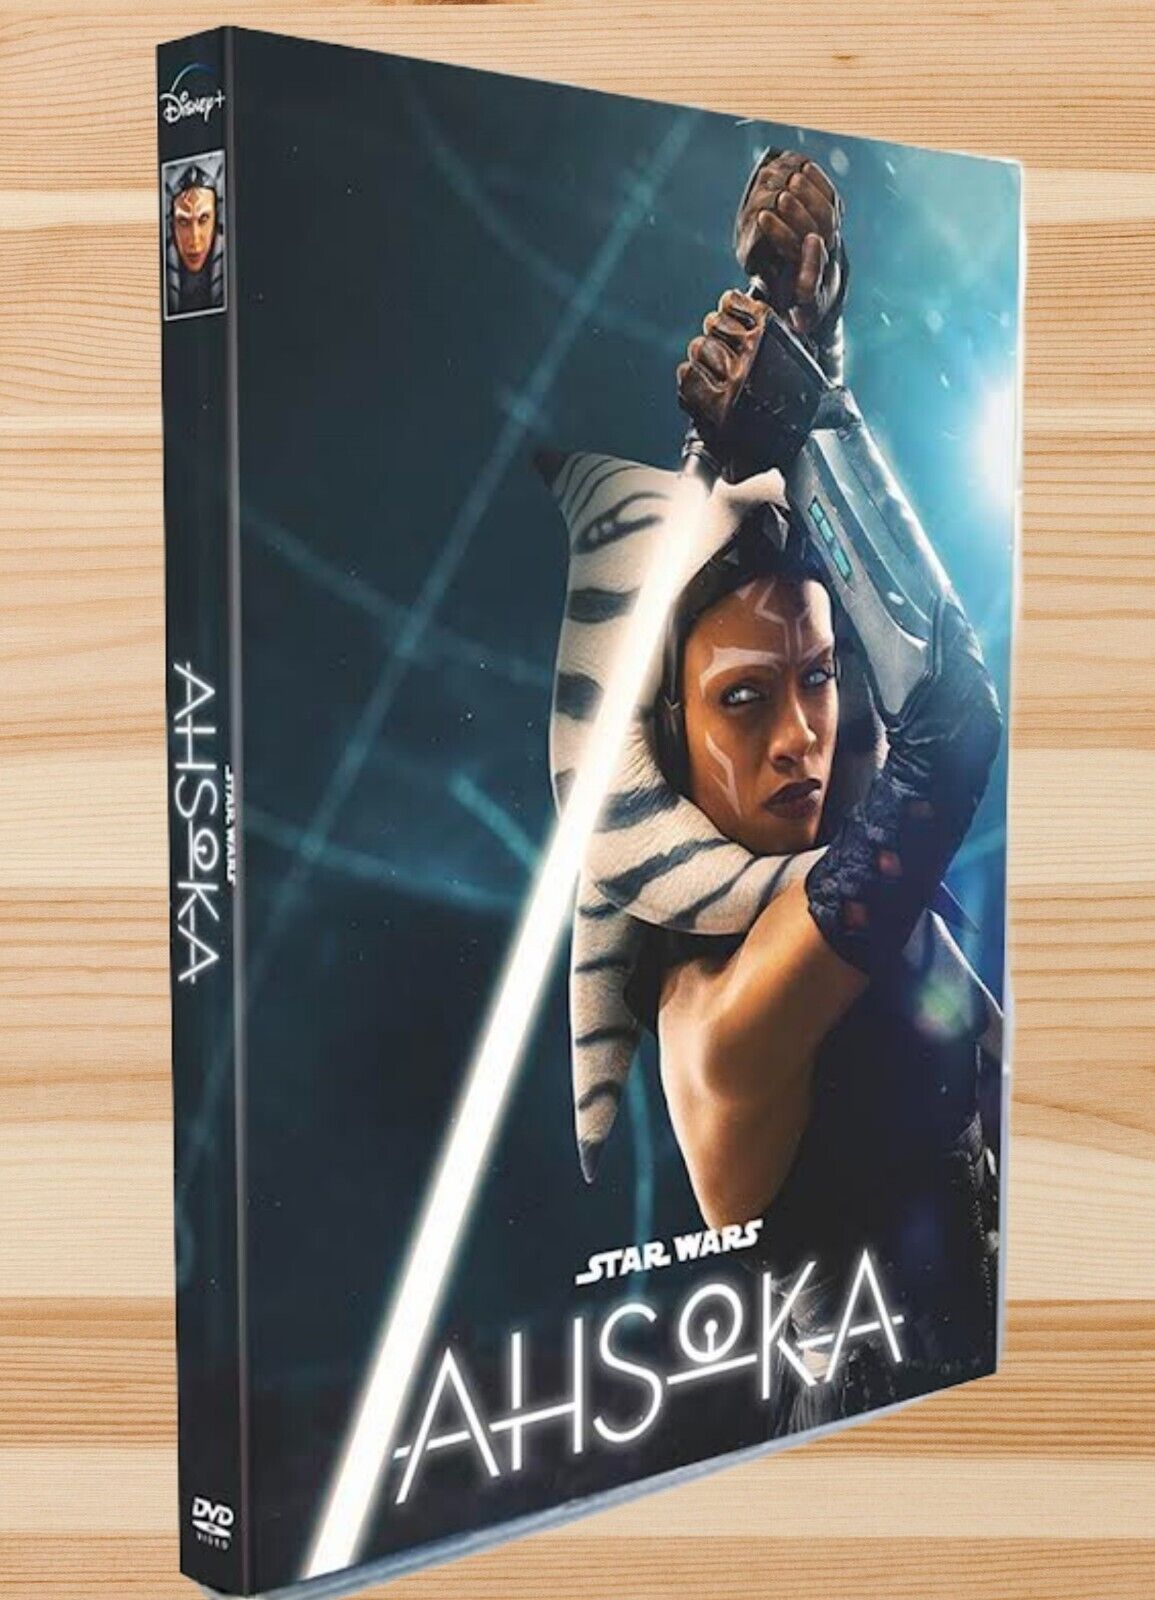 Star Wars, Ahsoka: The Complete Season 1 (DVD) Free Delivery